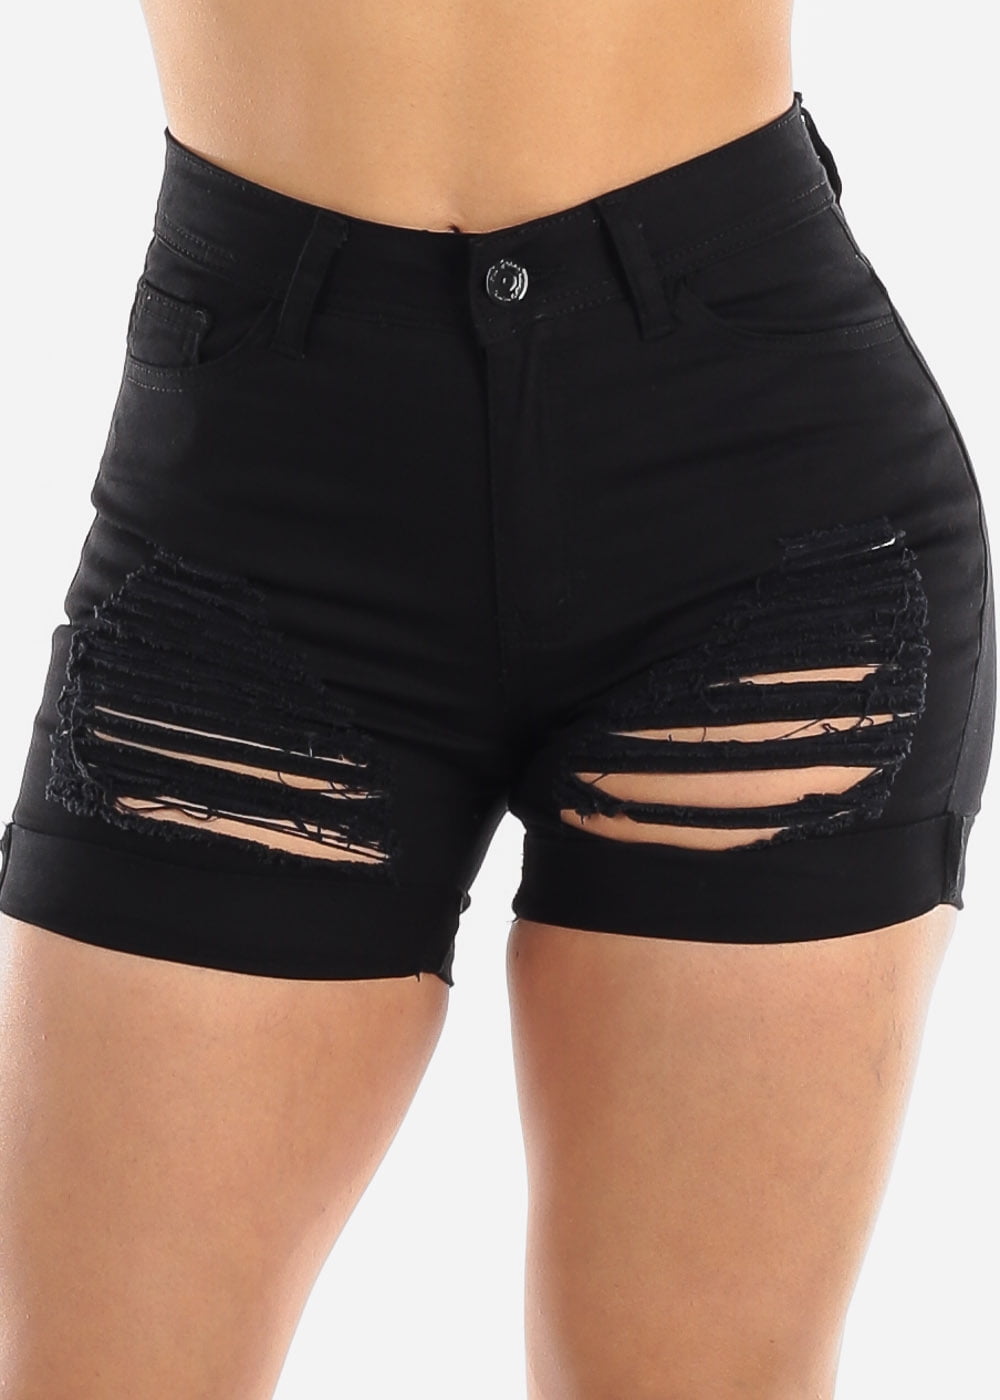 distressed black jean shorts